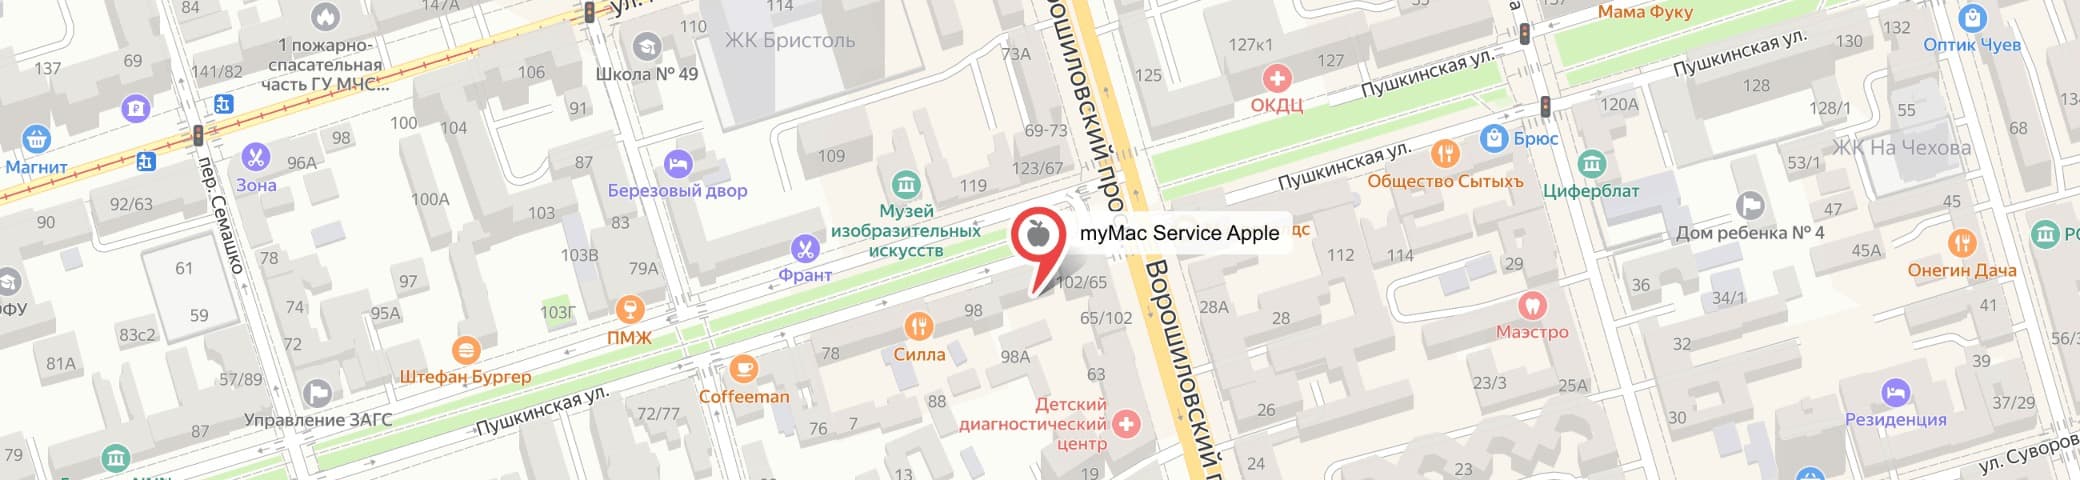 Yandex-maps